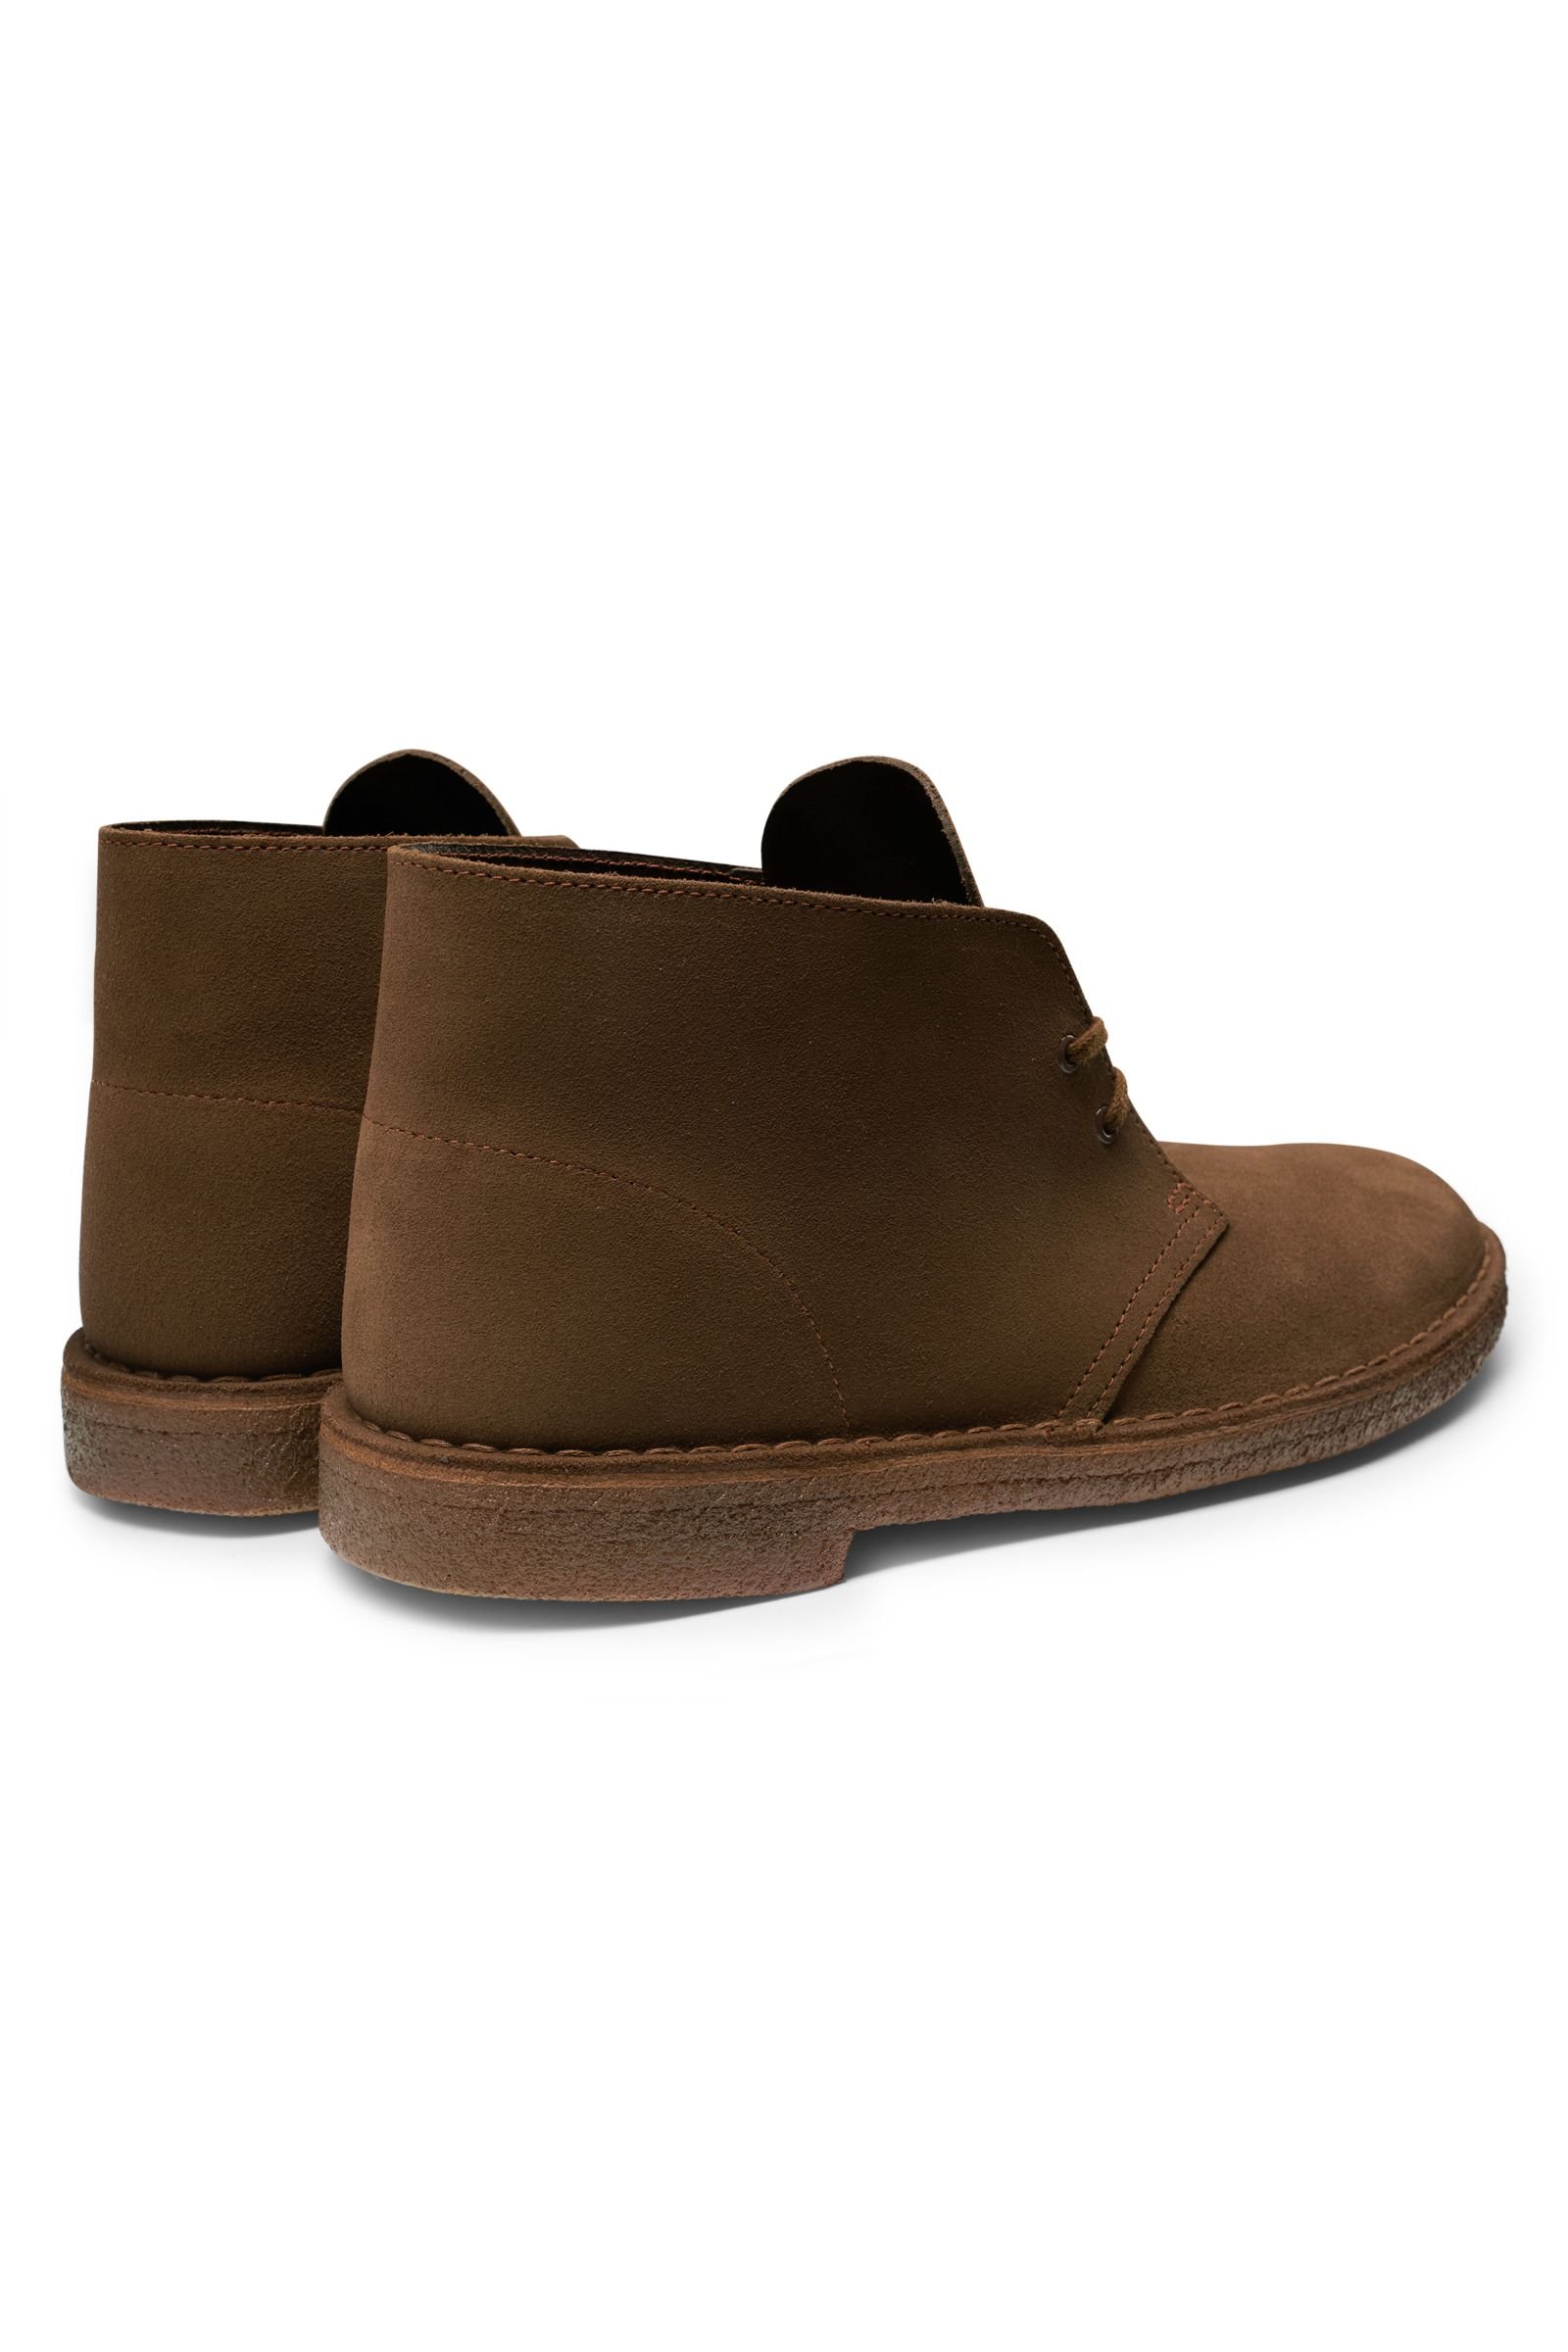 clarks brown desert boots